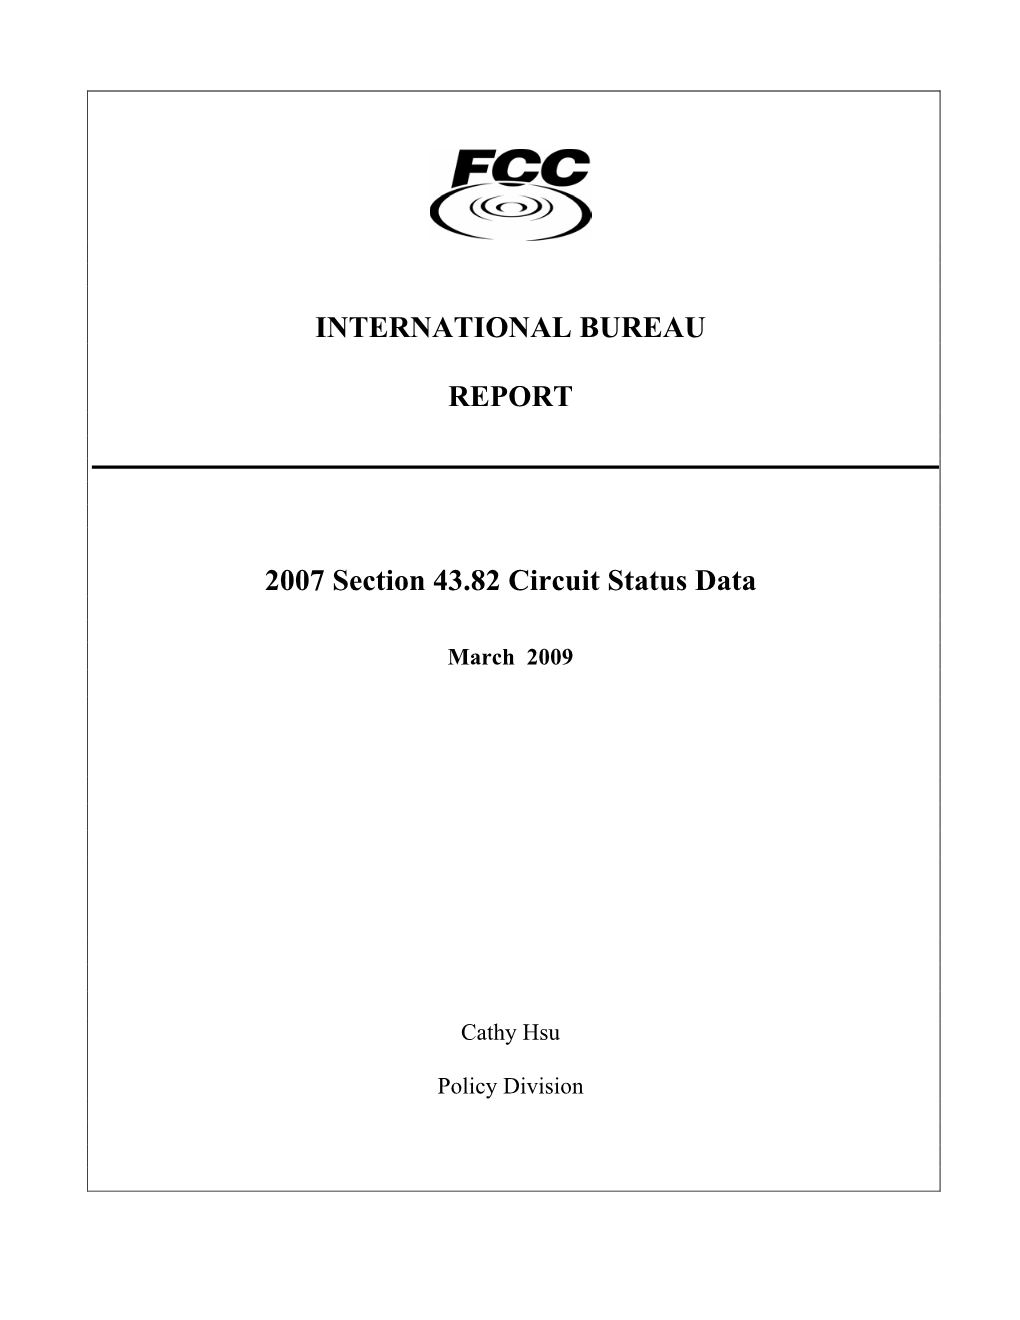 INTERNATIONAL BUREAU REPORT 2007 Section 43.82 Circuit Status